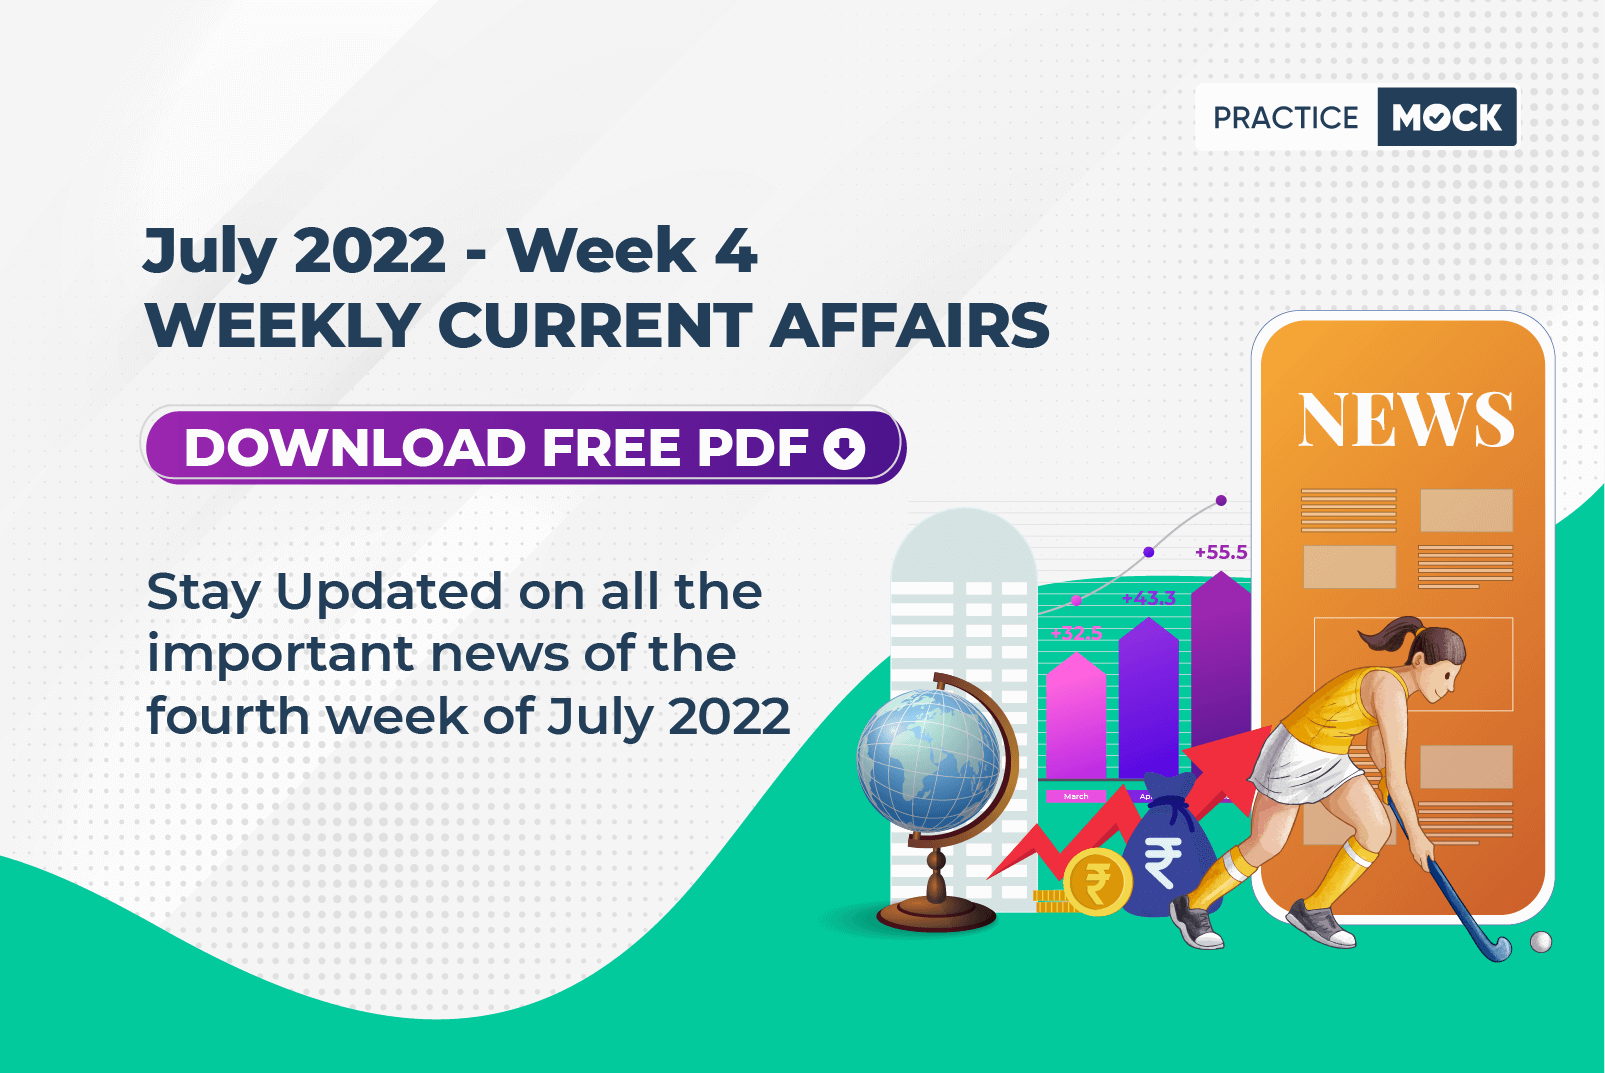 Weekly Current Affairs July Week 4